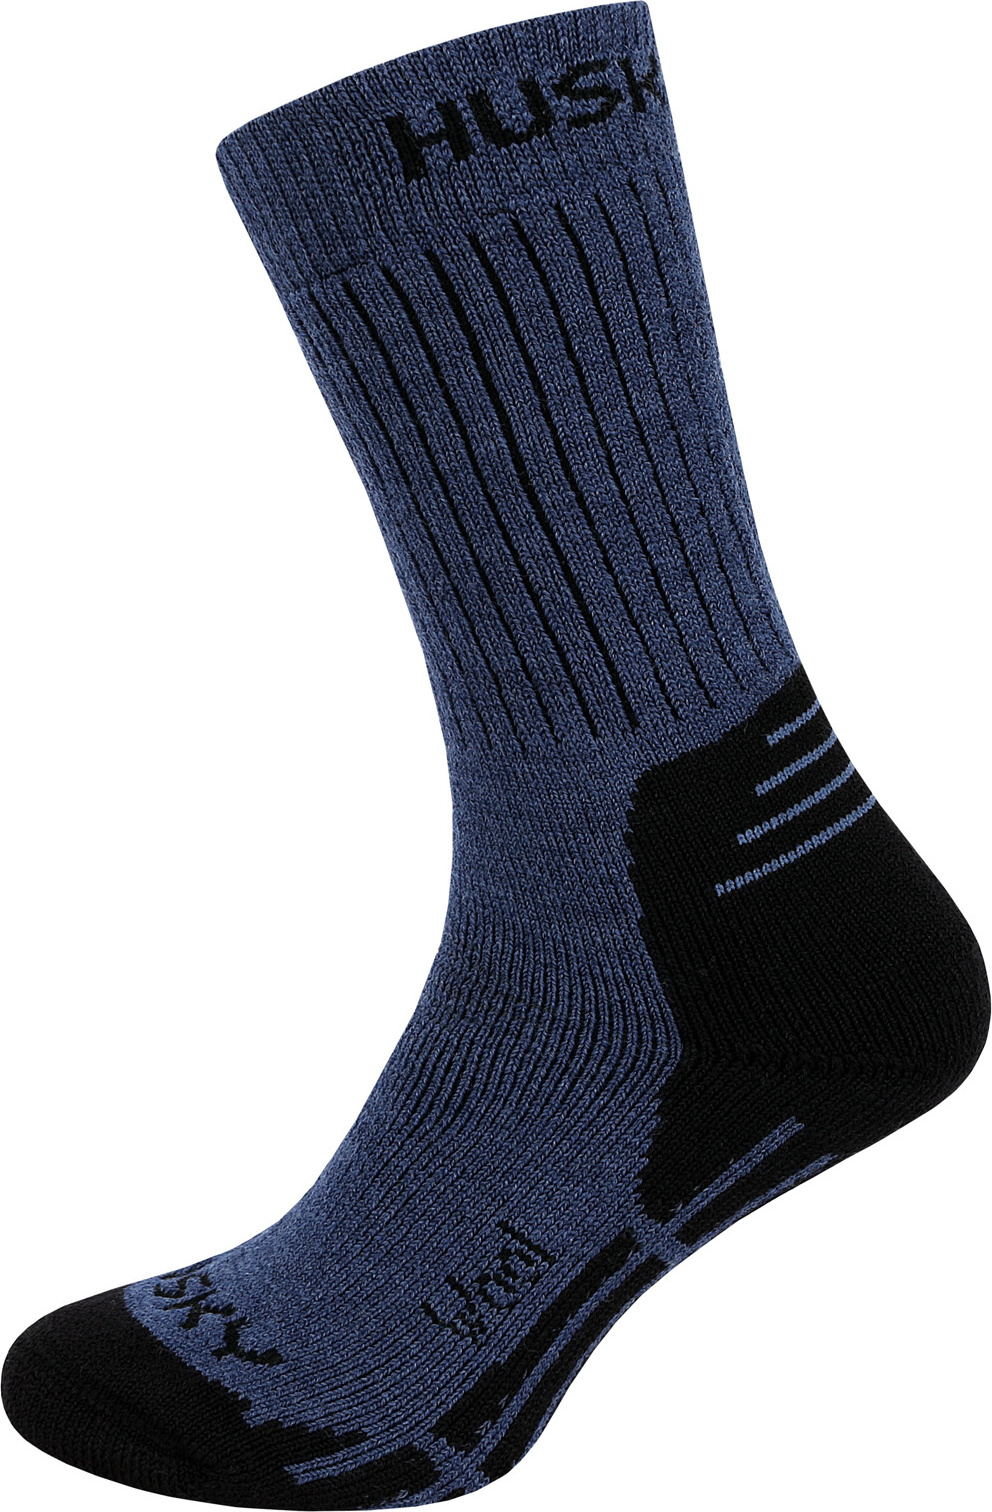 Ponožky HUSKY All Wool modrá + Sleva 5% - zadej v košíku kód: SLEVA5 Velikost: M (36-40)